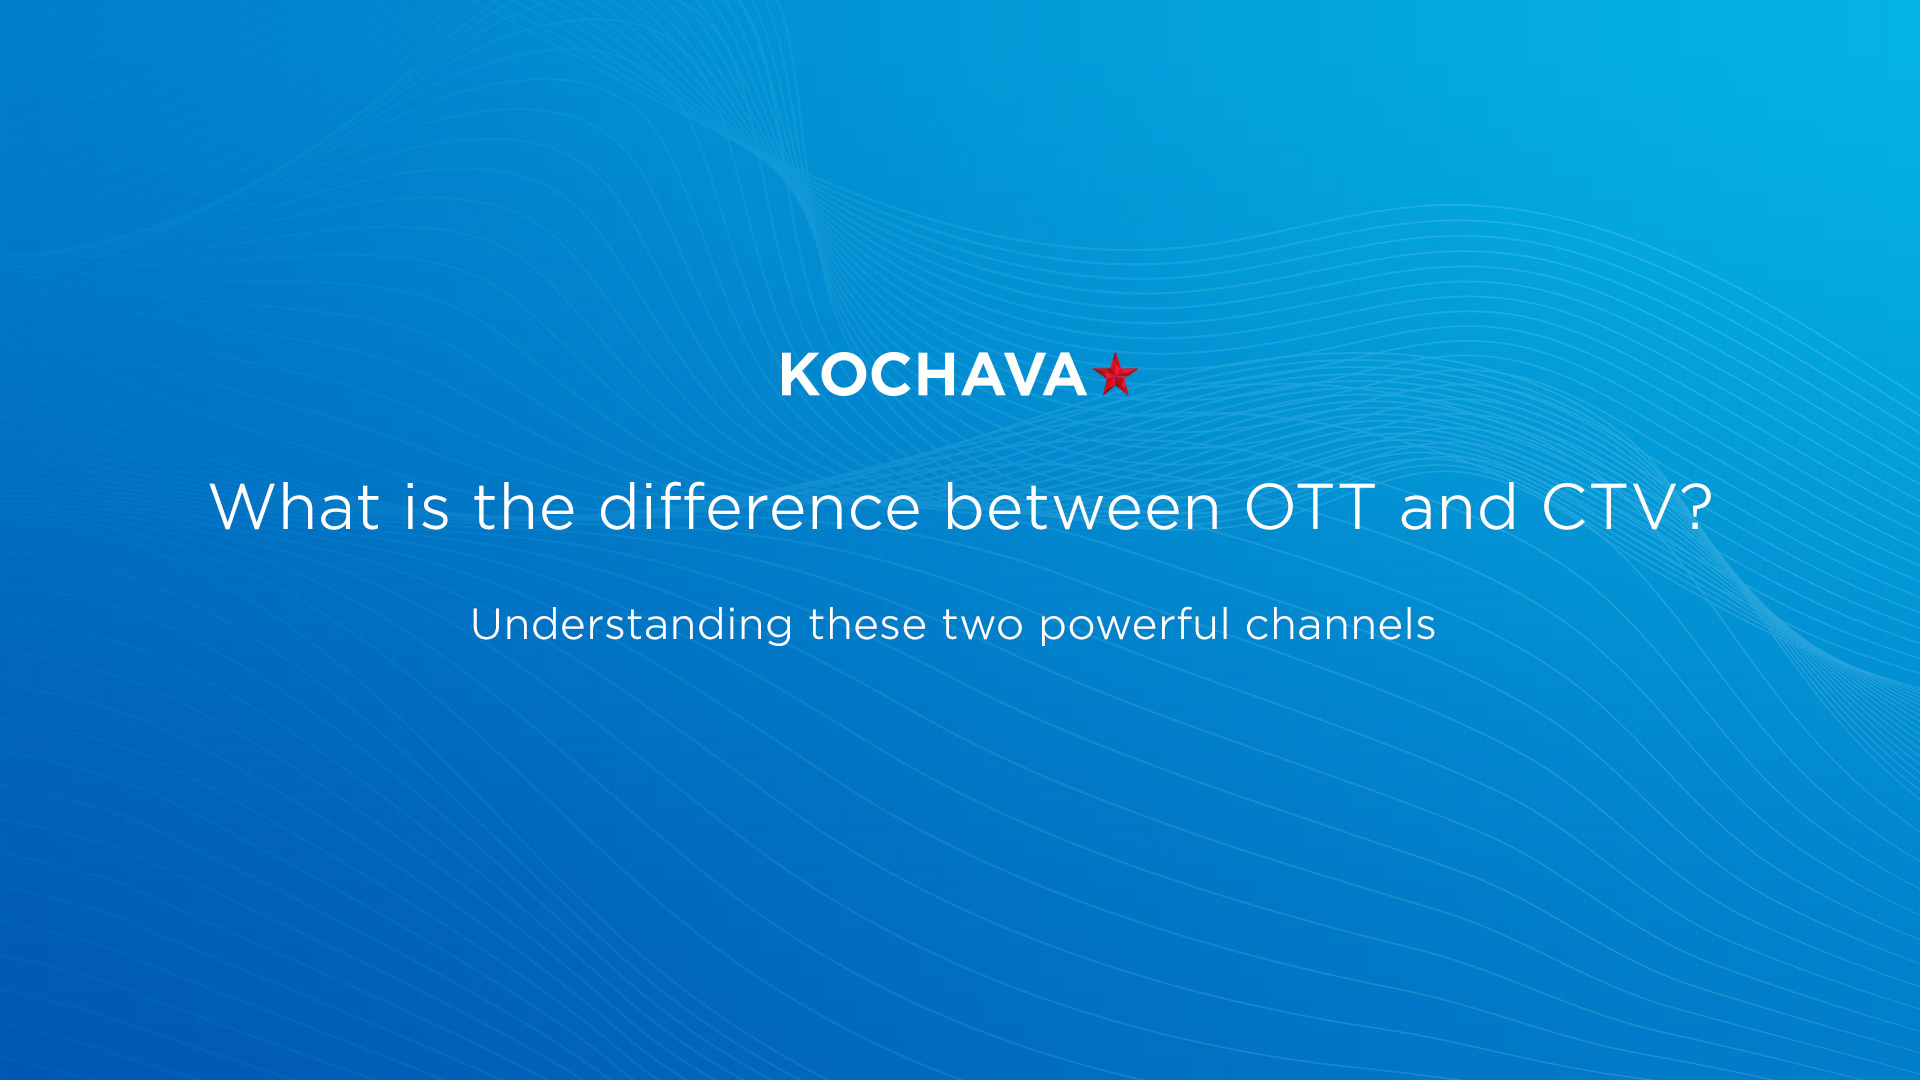 OTTCTV Connecting the Dots Social v